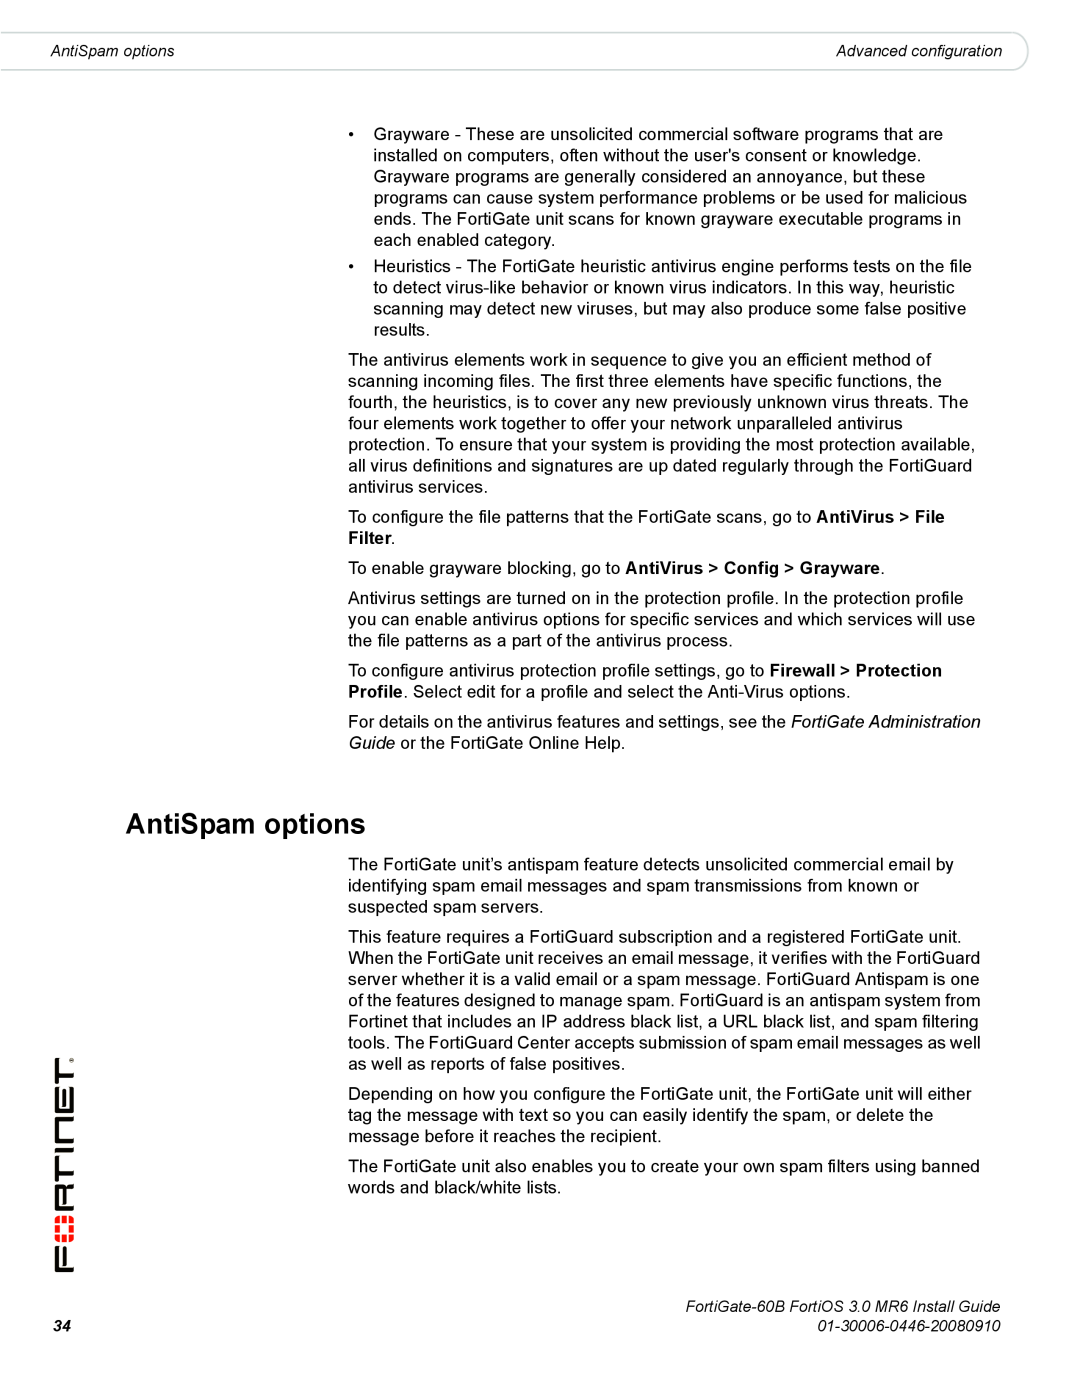 Fortinet 60B manual AntiSpam options 